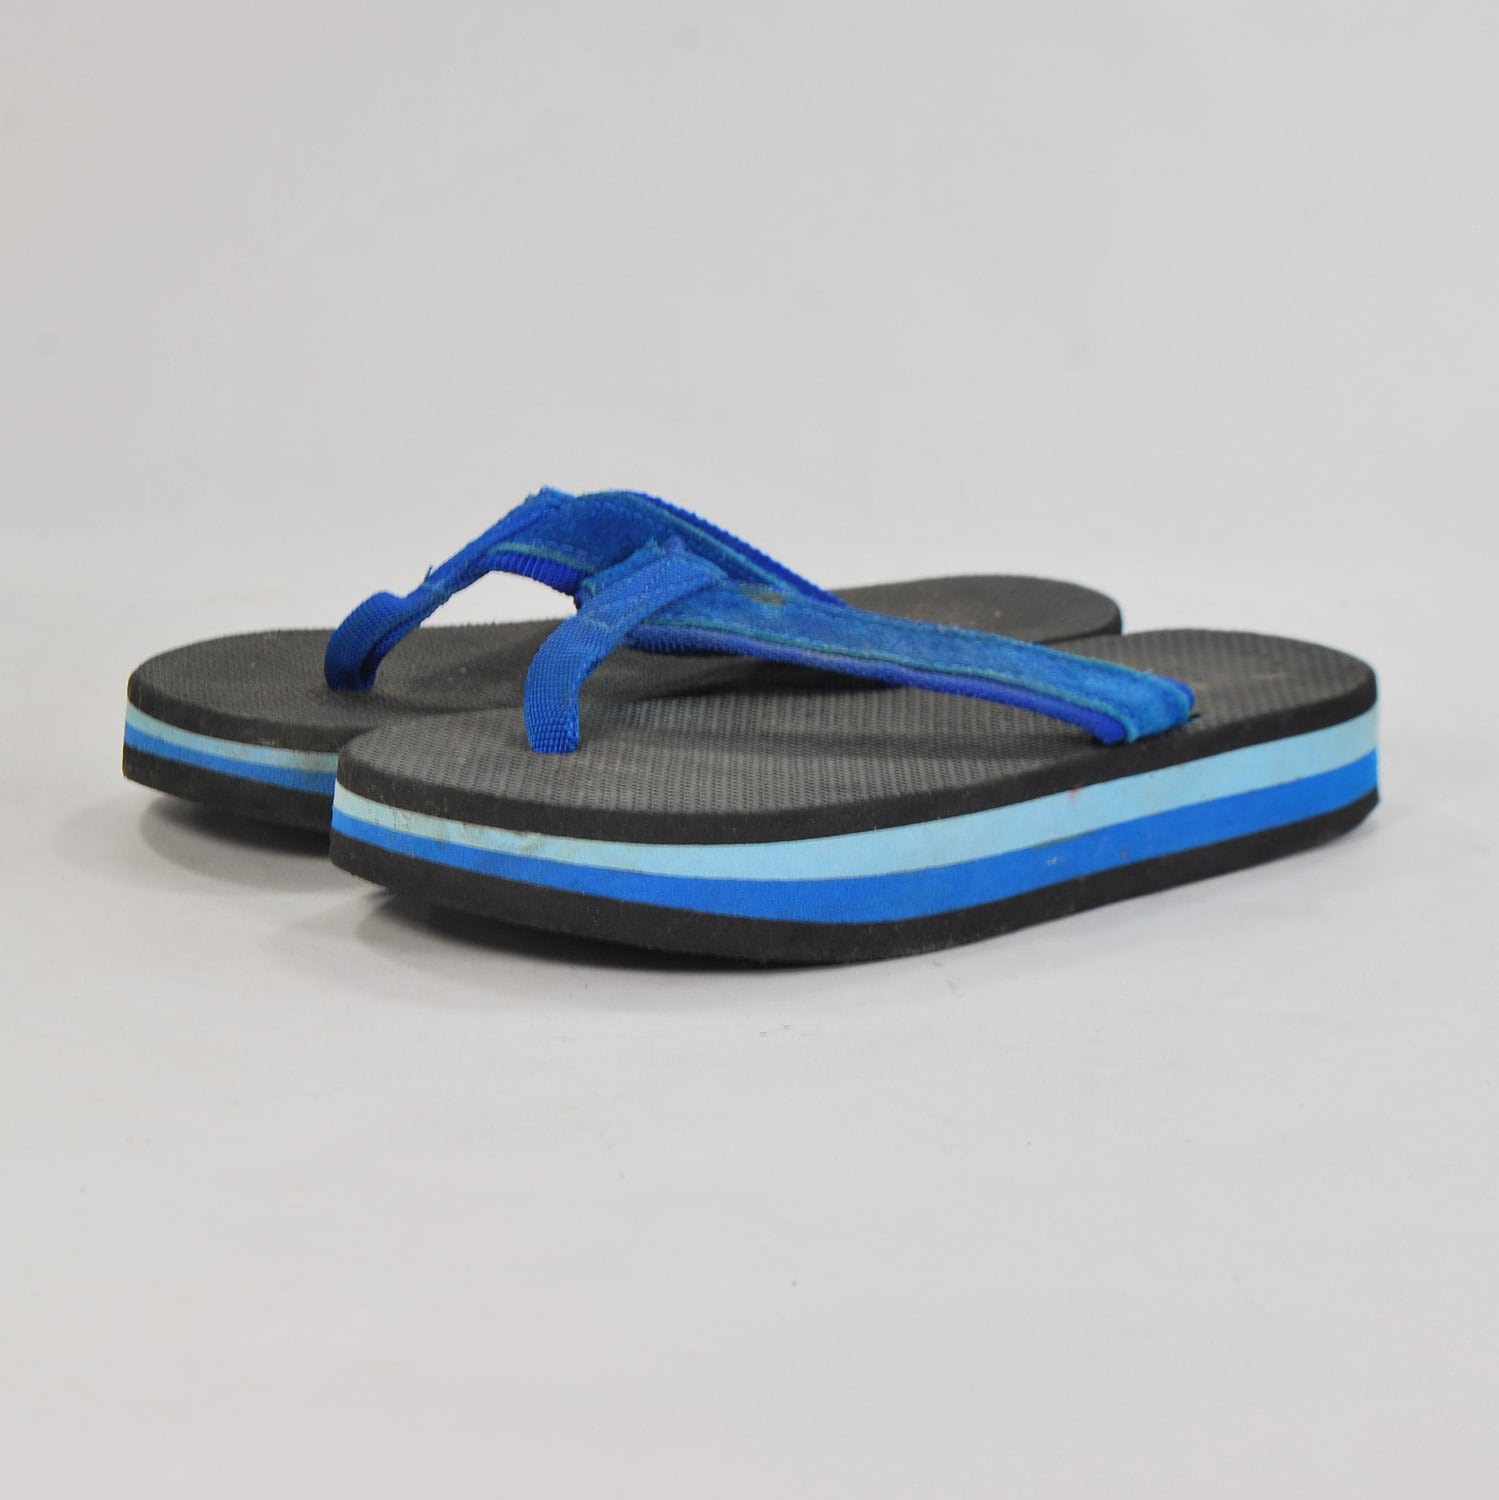 Retro classic flip flops .blue suede summertime staples